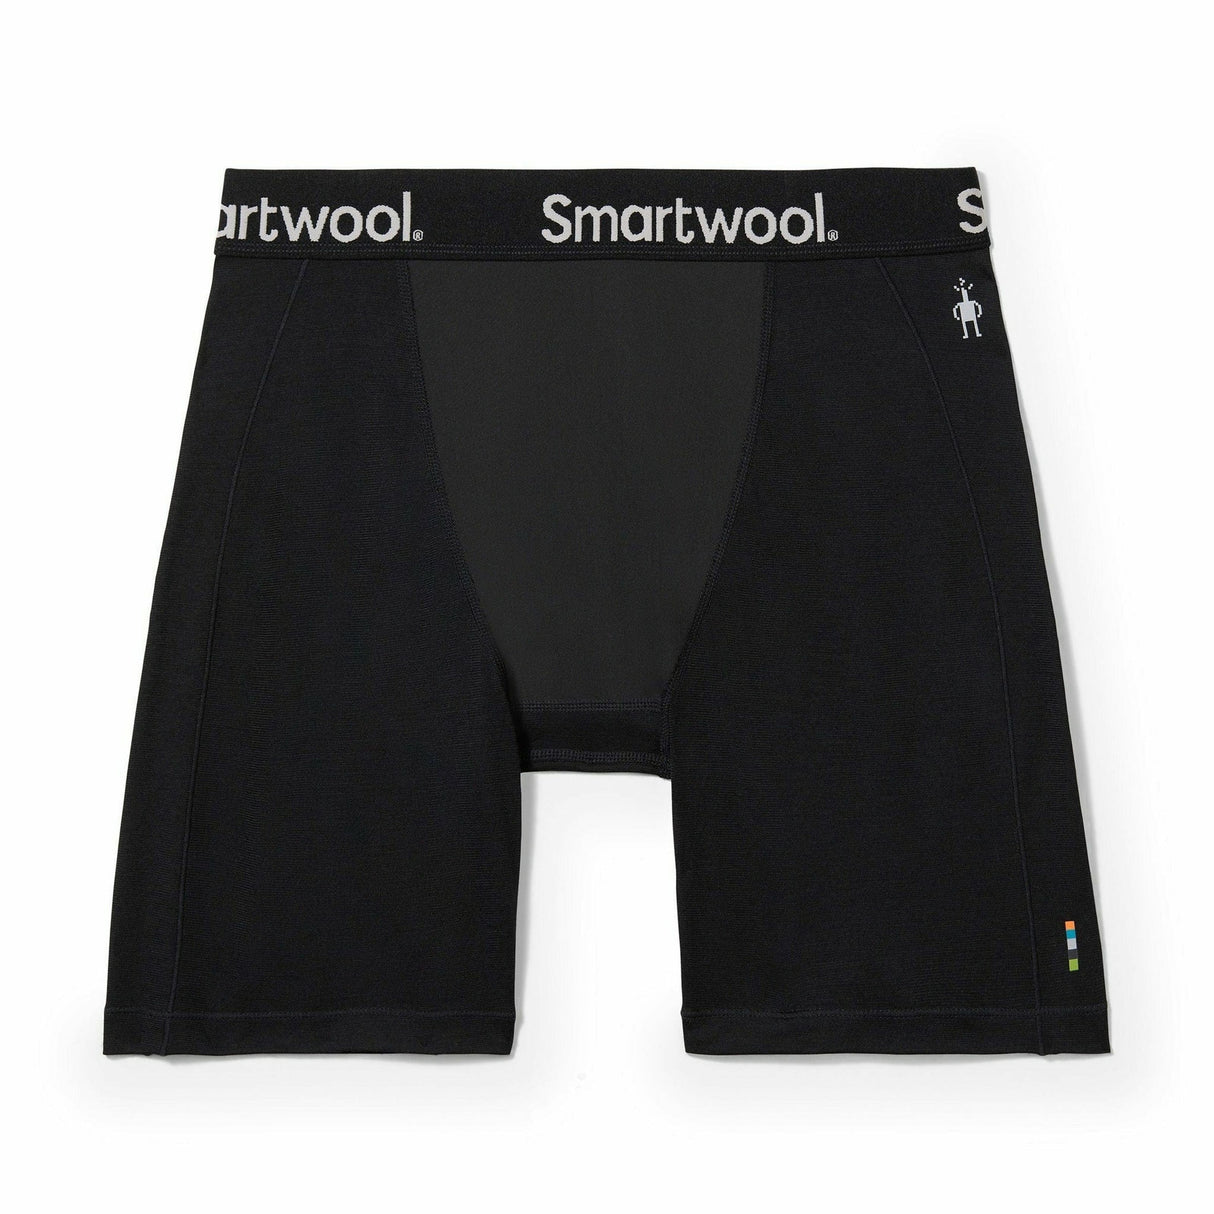 Smartwool Mens Merino Sport Wind Boxer Brief  -  Small / Black